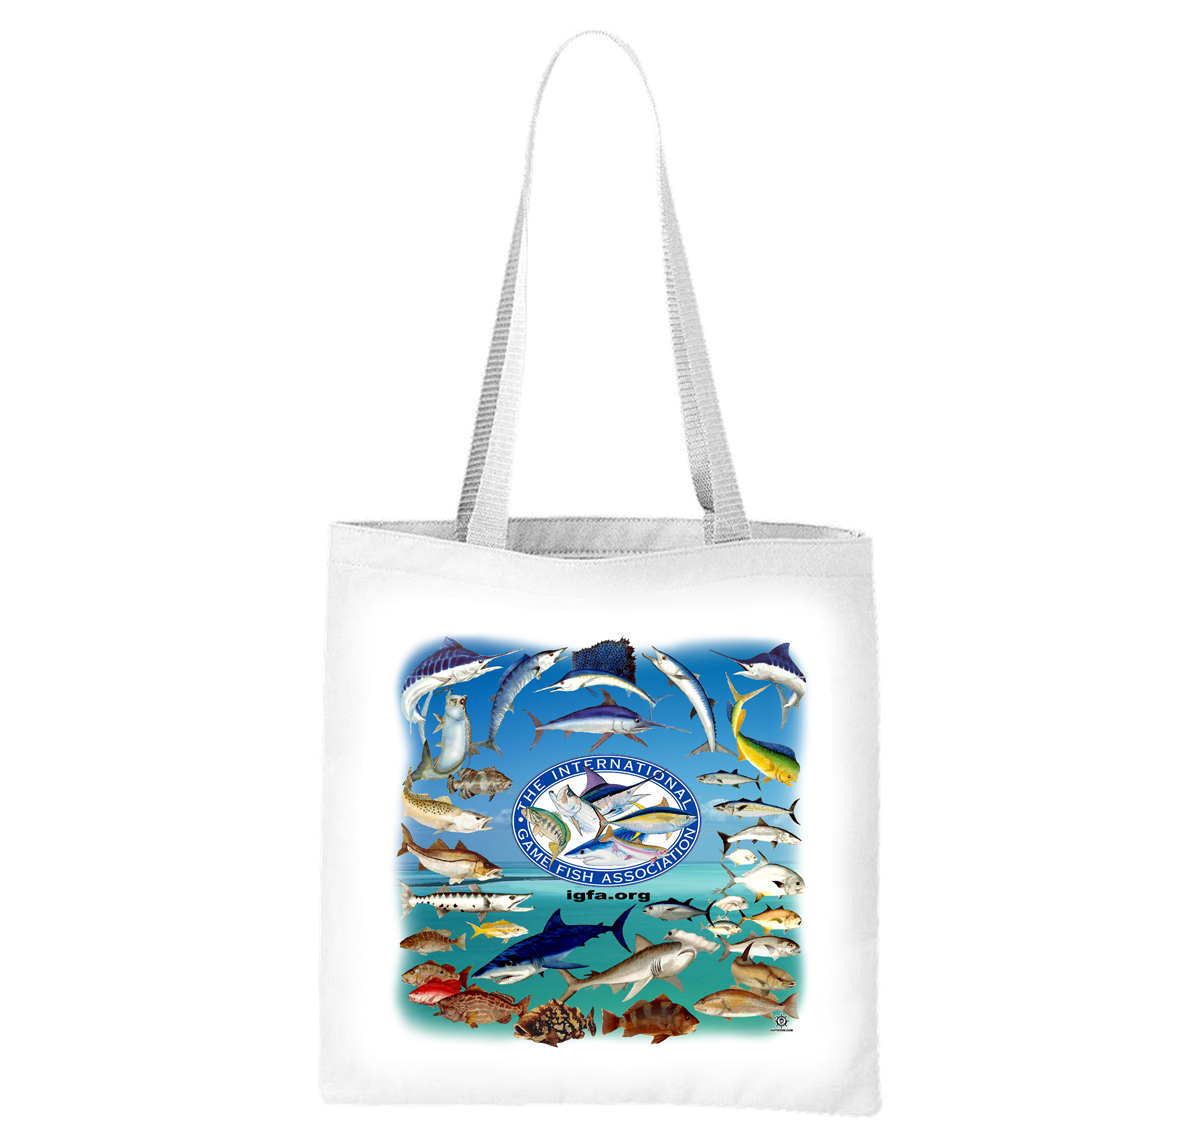 Design 1 - The International Game Fish Association Liberty Bag